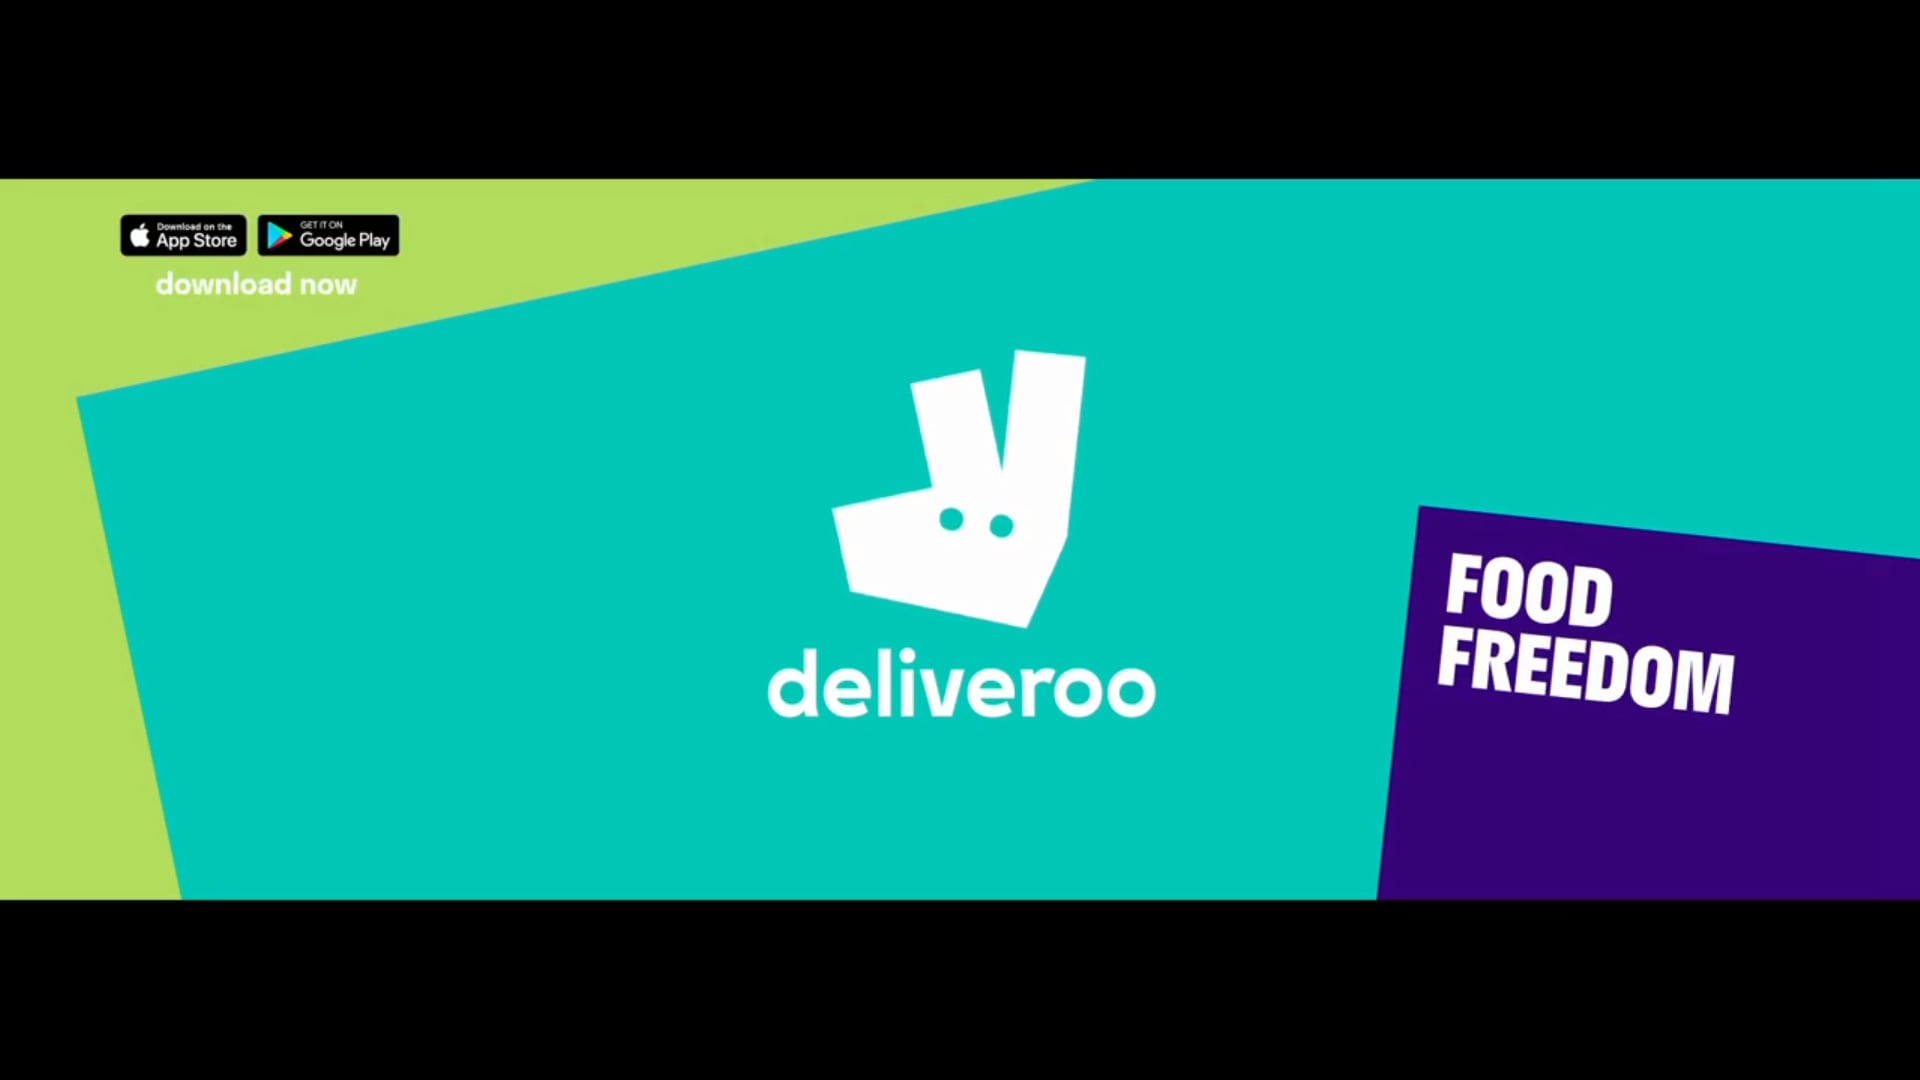 Deliveroo - Food Freedom